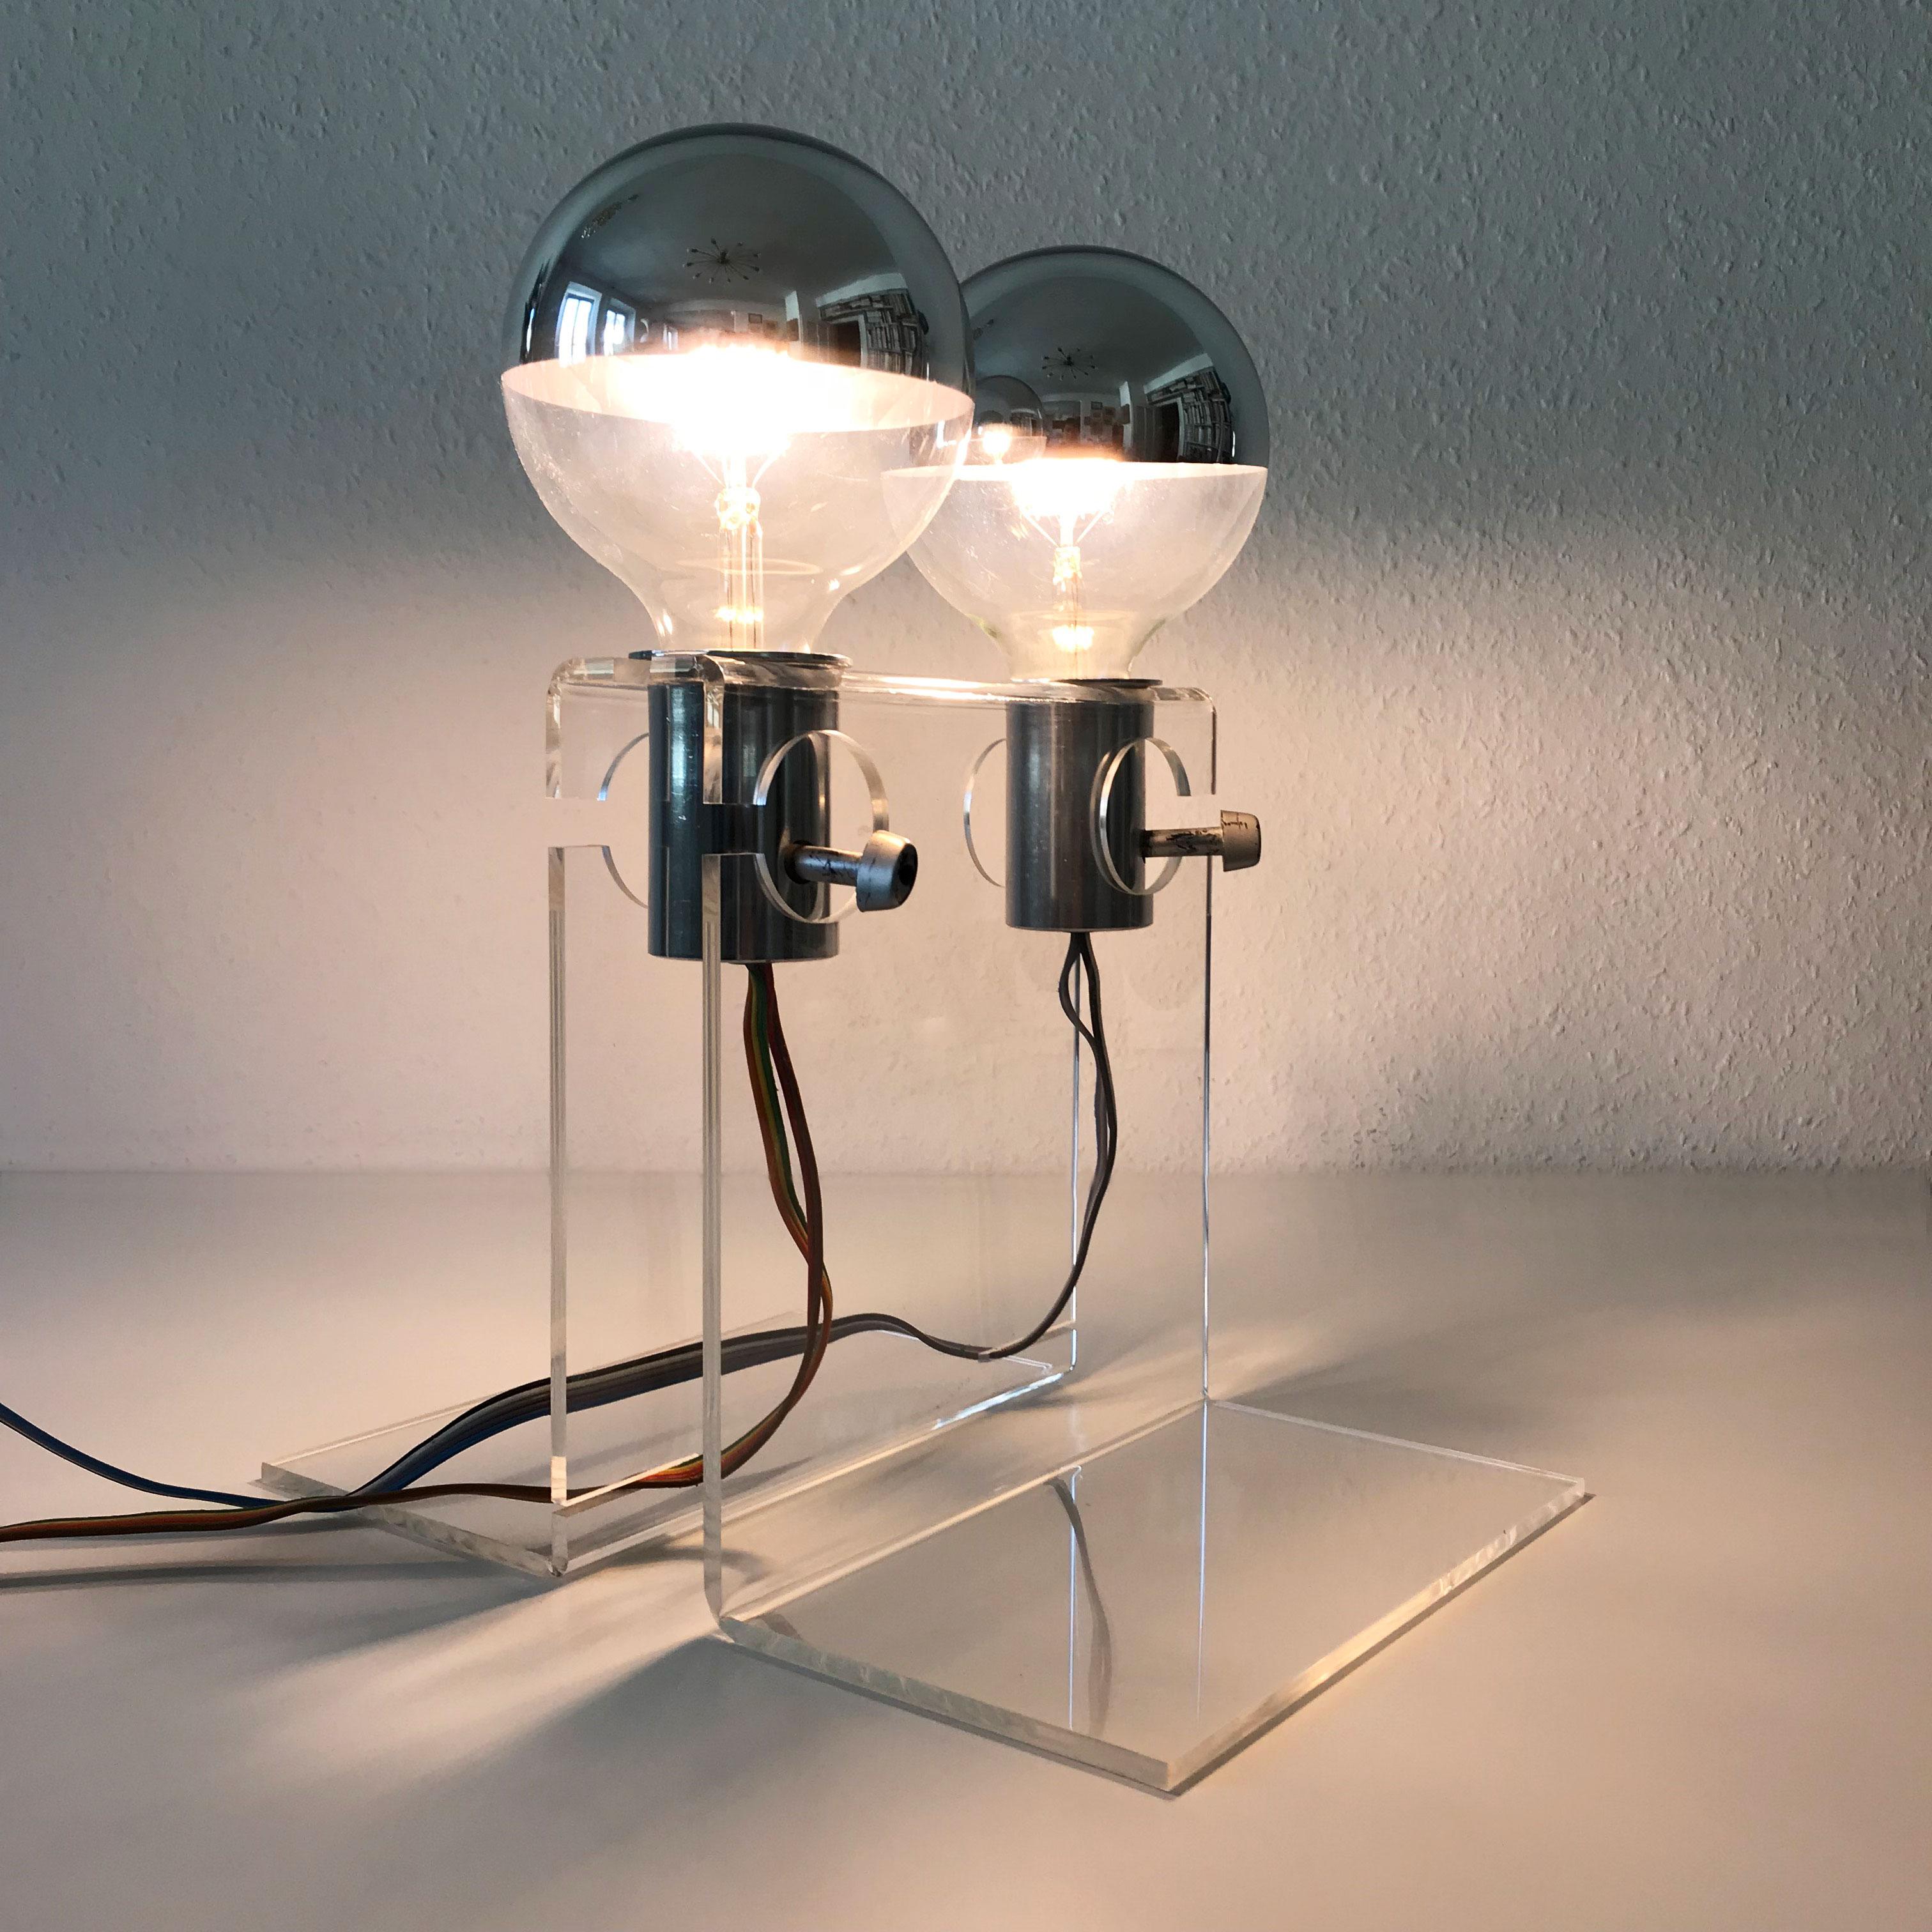 German Stunning Mid Century Modern Plexiglass Table Lamp or Light Object, 1970s For Sale